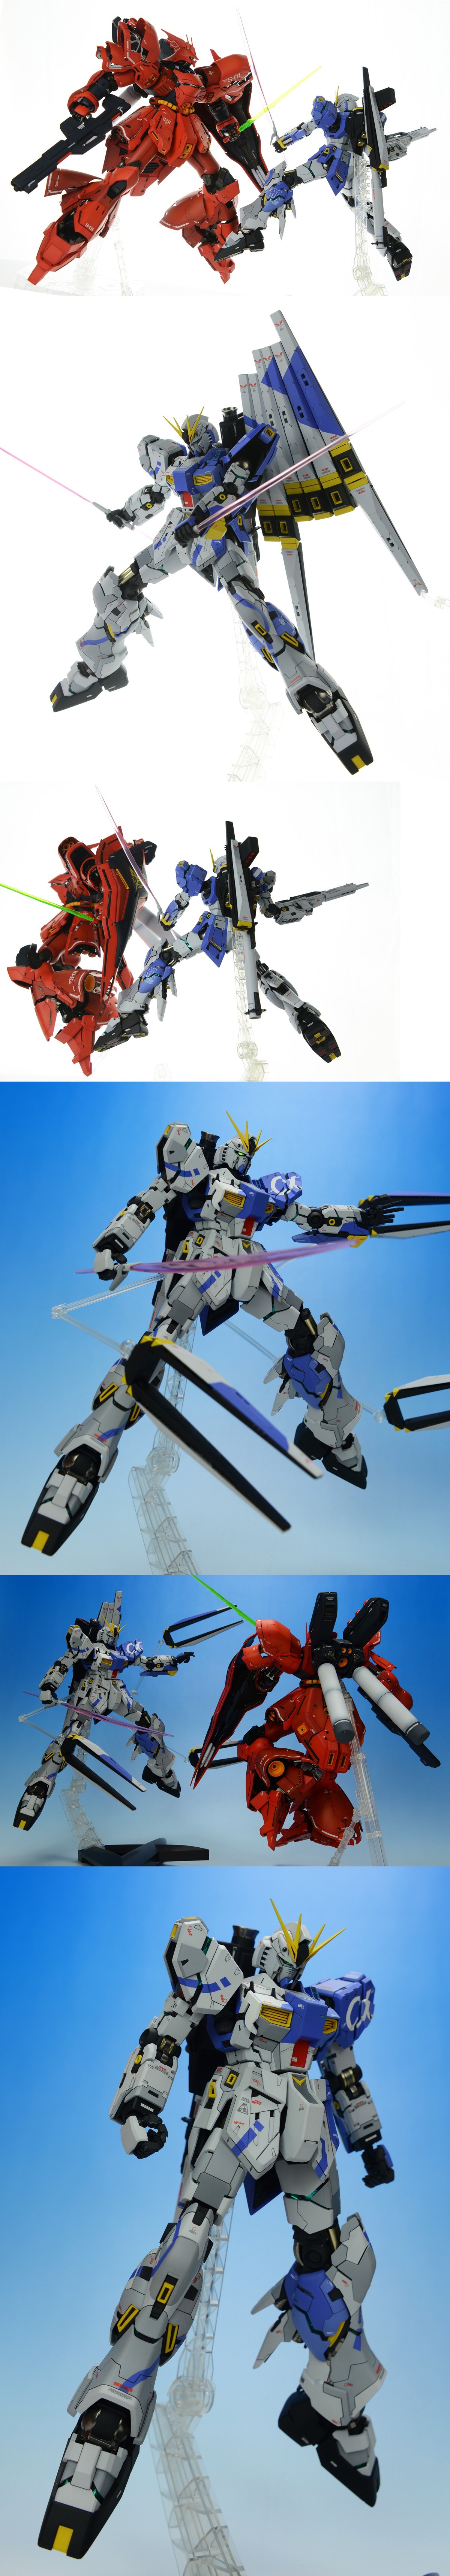 Mg 1 100 Rx 93 Nu Gundam Ver Ka Kowloon Fist Vs Sazabi Full Photoreview Wallpaper Size Images Gunjap